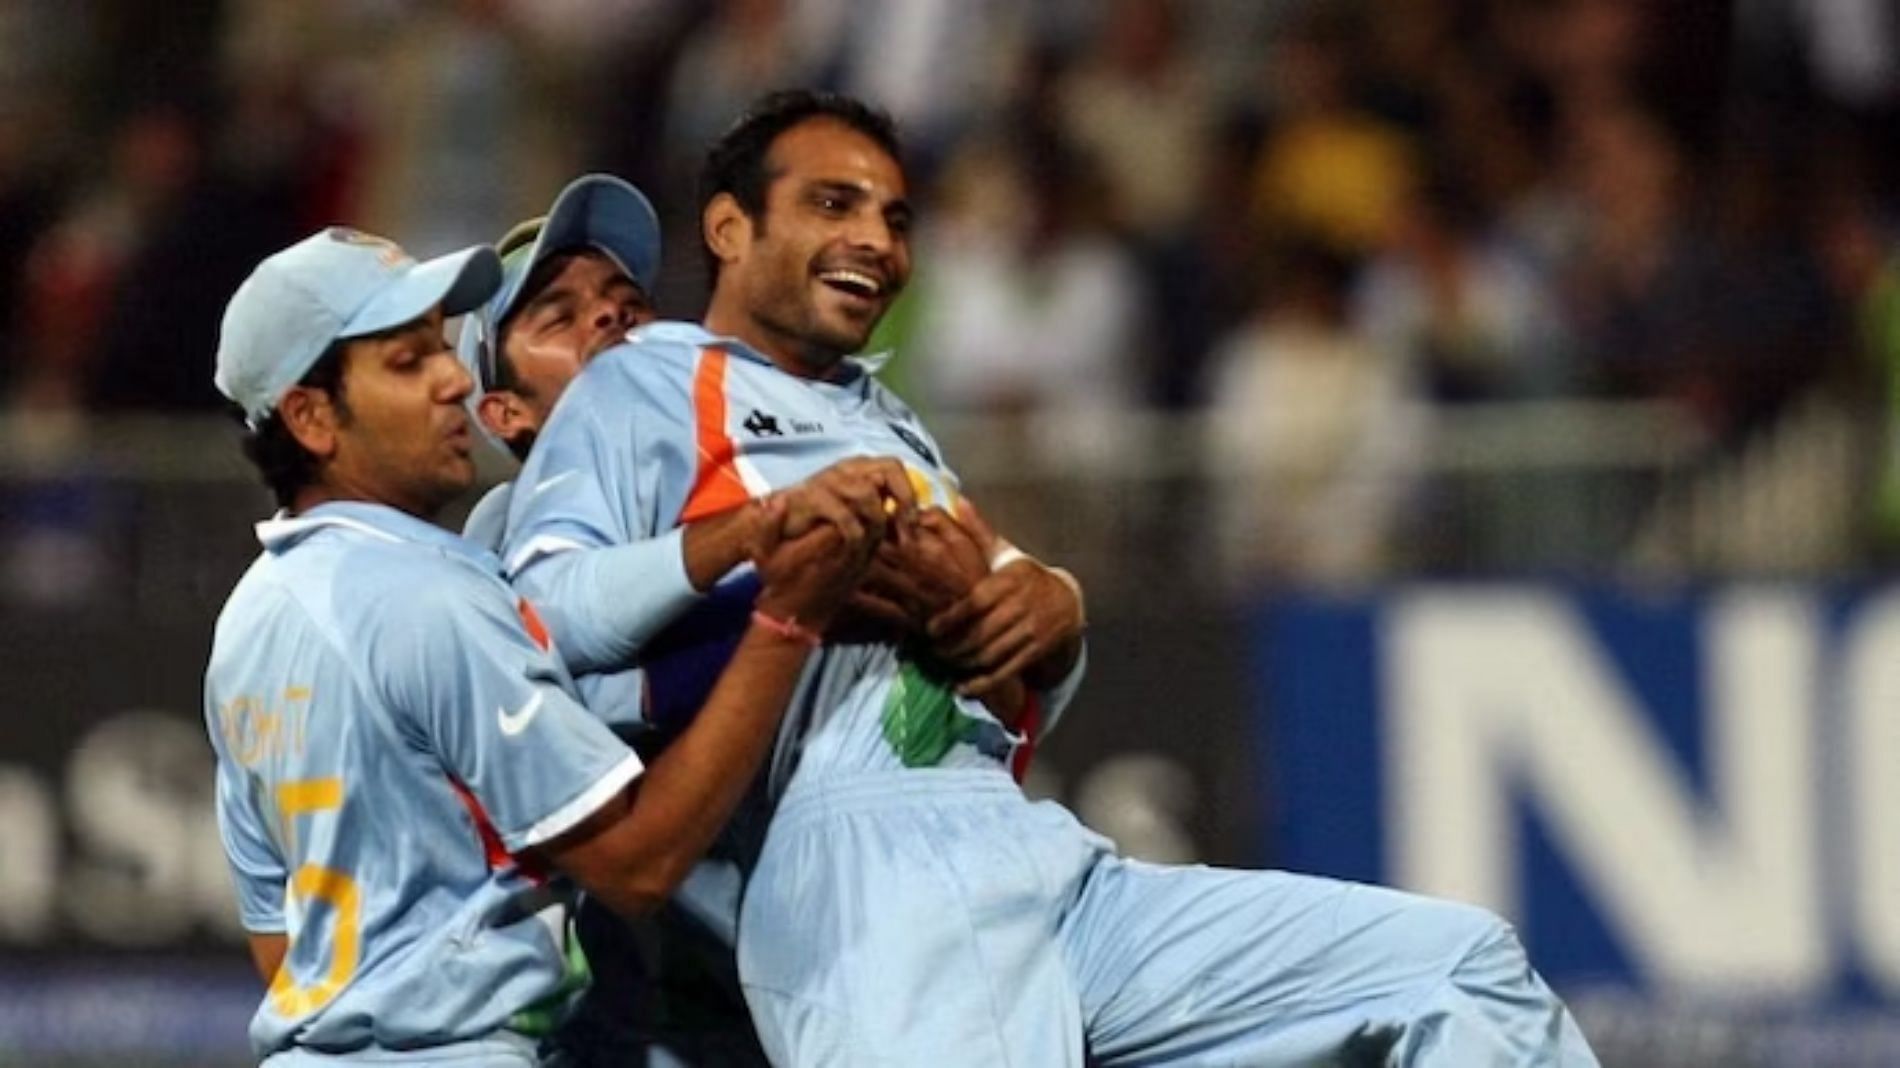 Joginder Sharma, T20 World Cup 2007 final